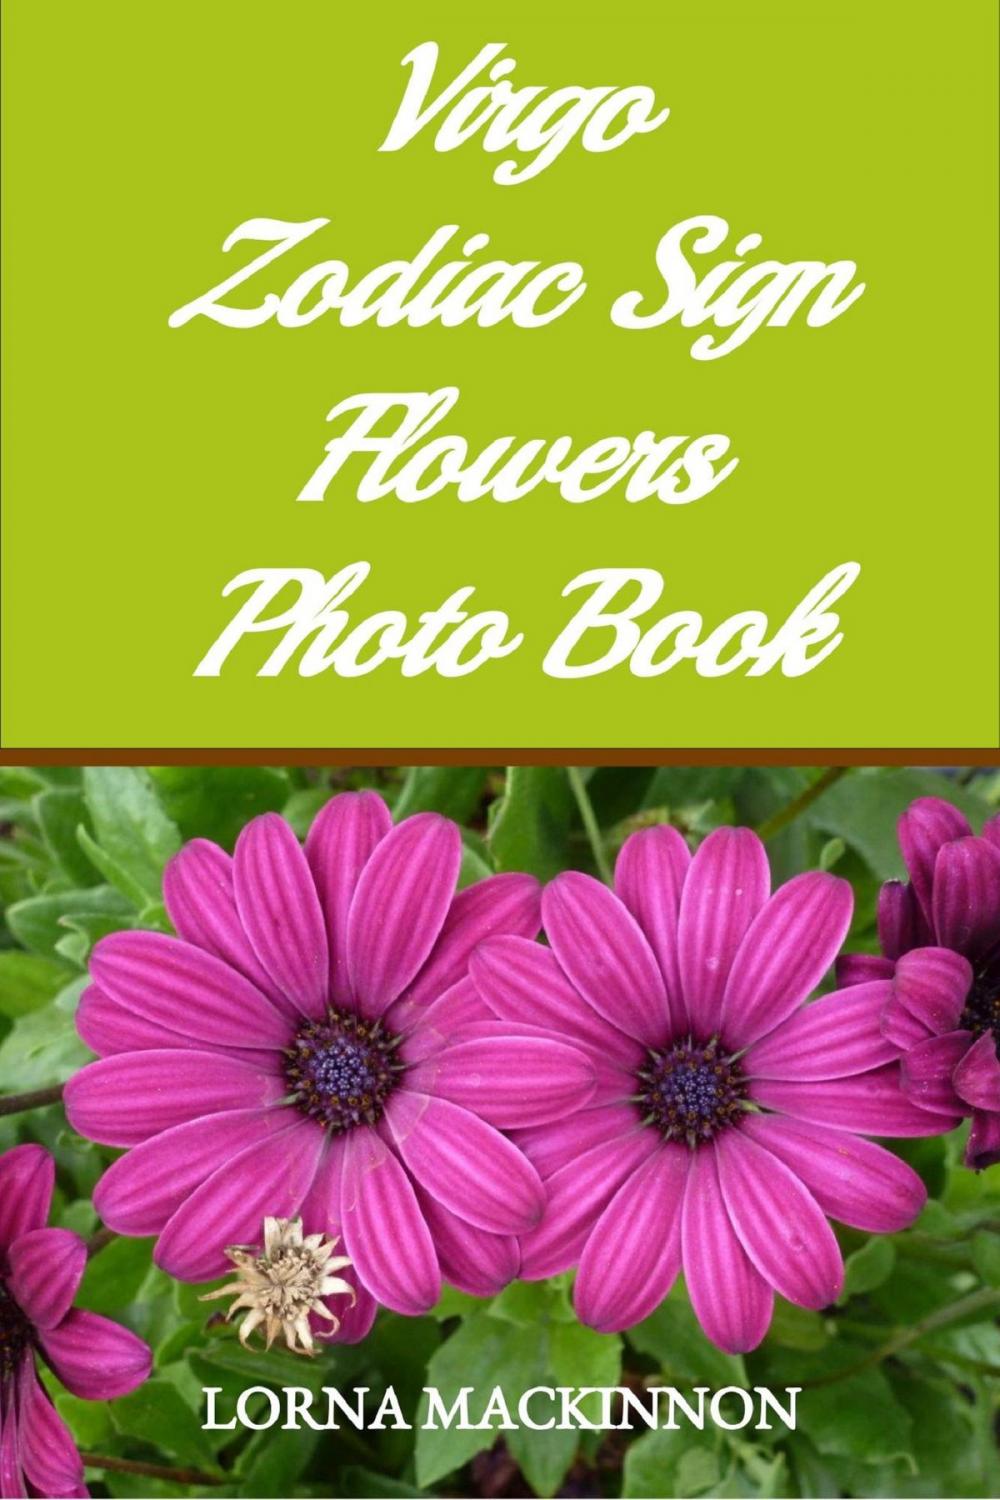 Big bigCover of Virgo Zodiac Sign Flowers Photo Book